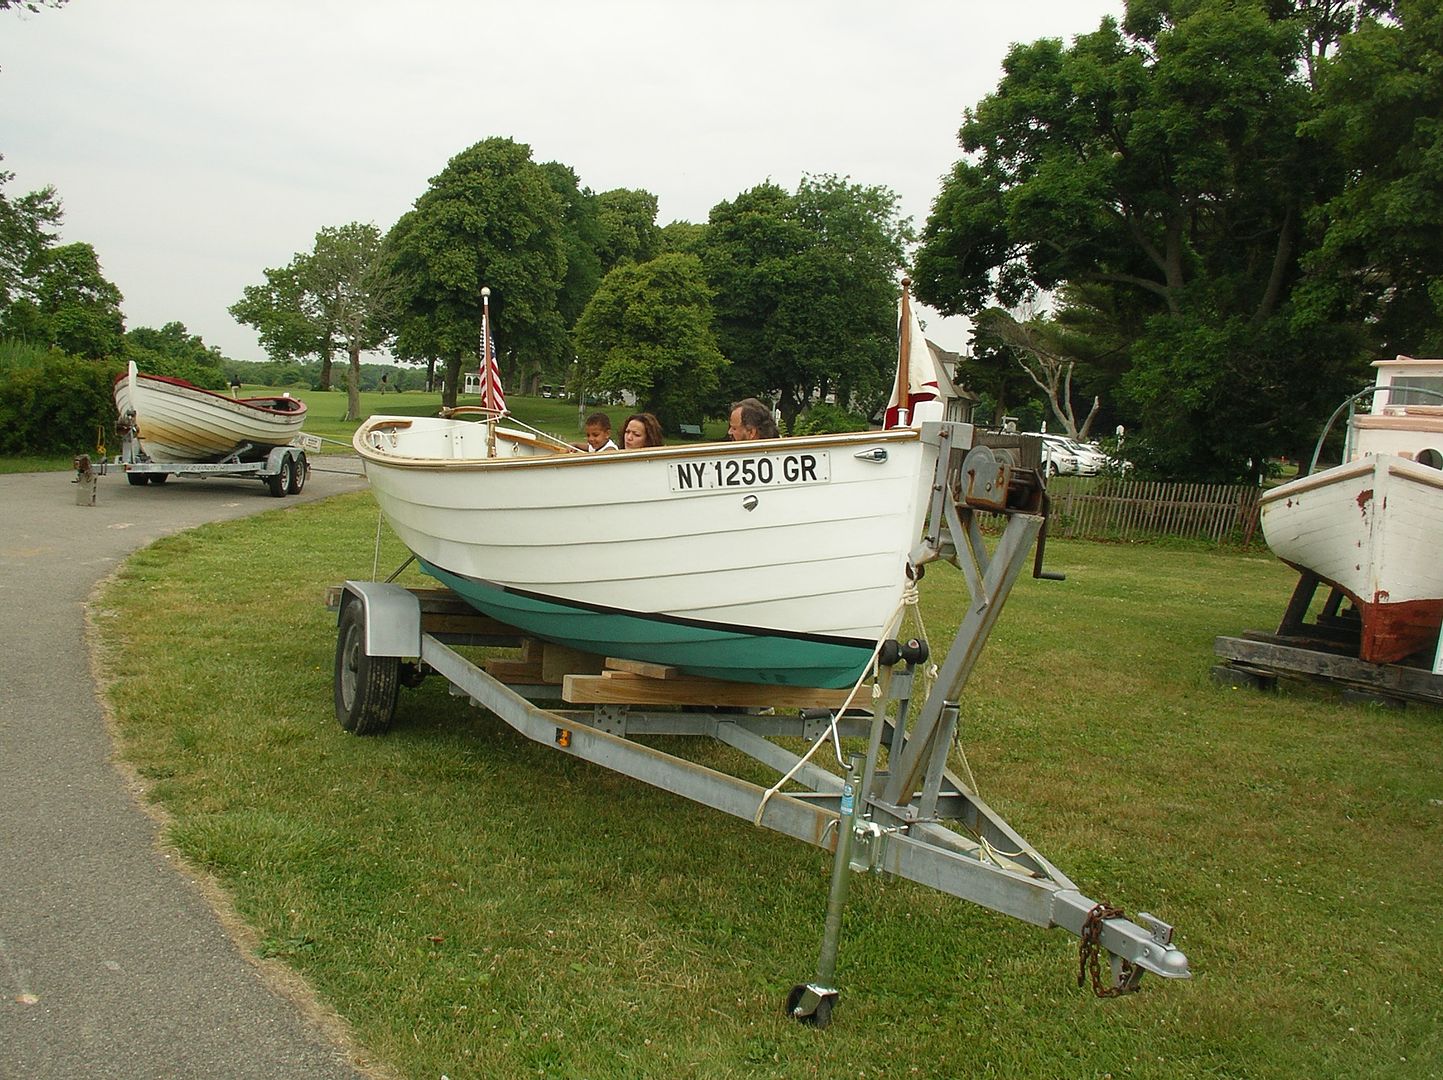 Thread: Sea bright lapstrake skiff 19 "what type boat trailer"?